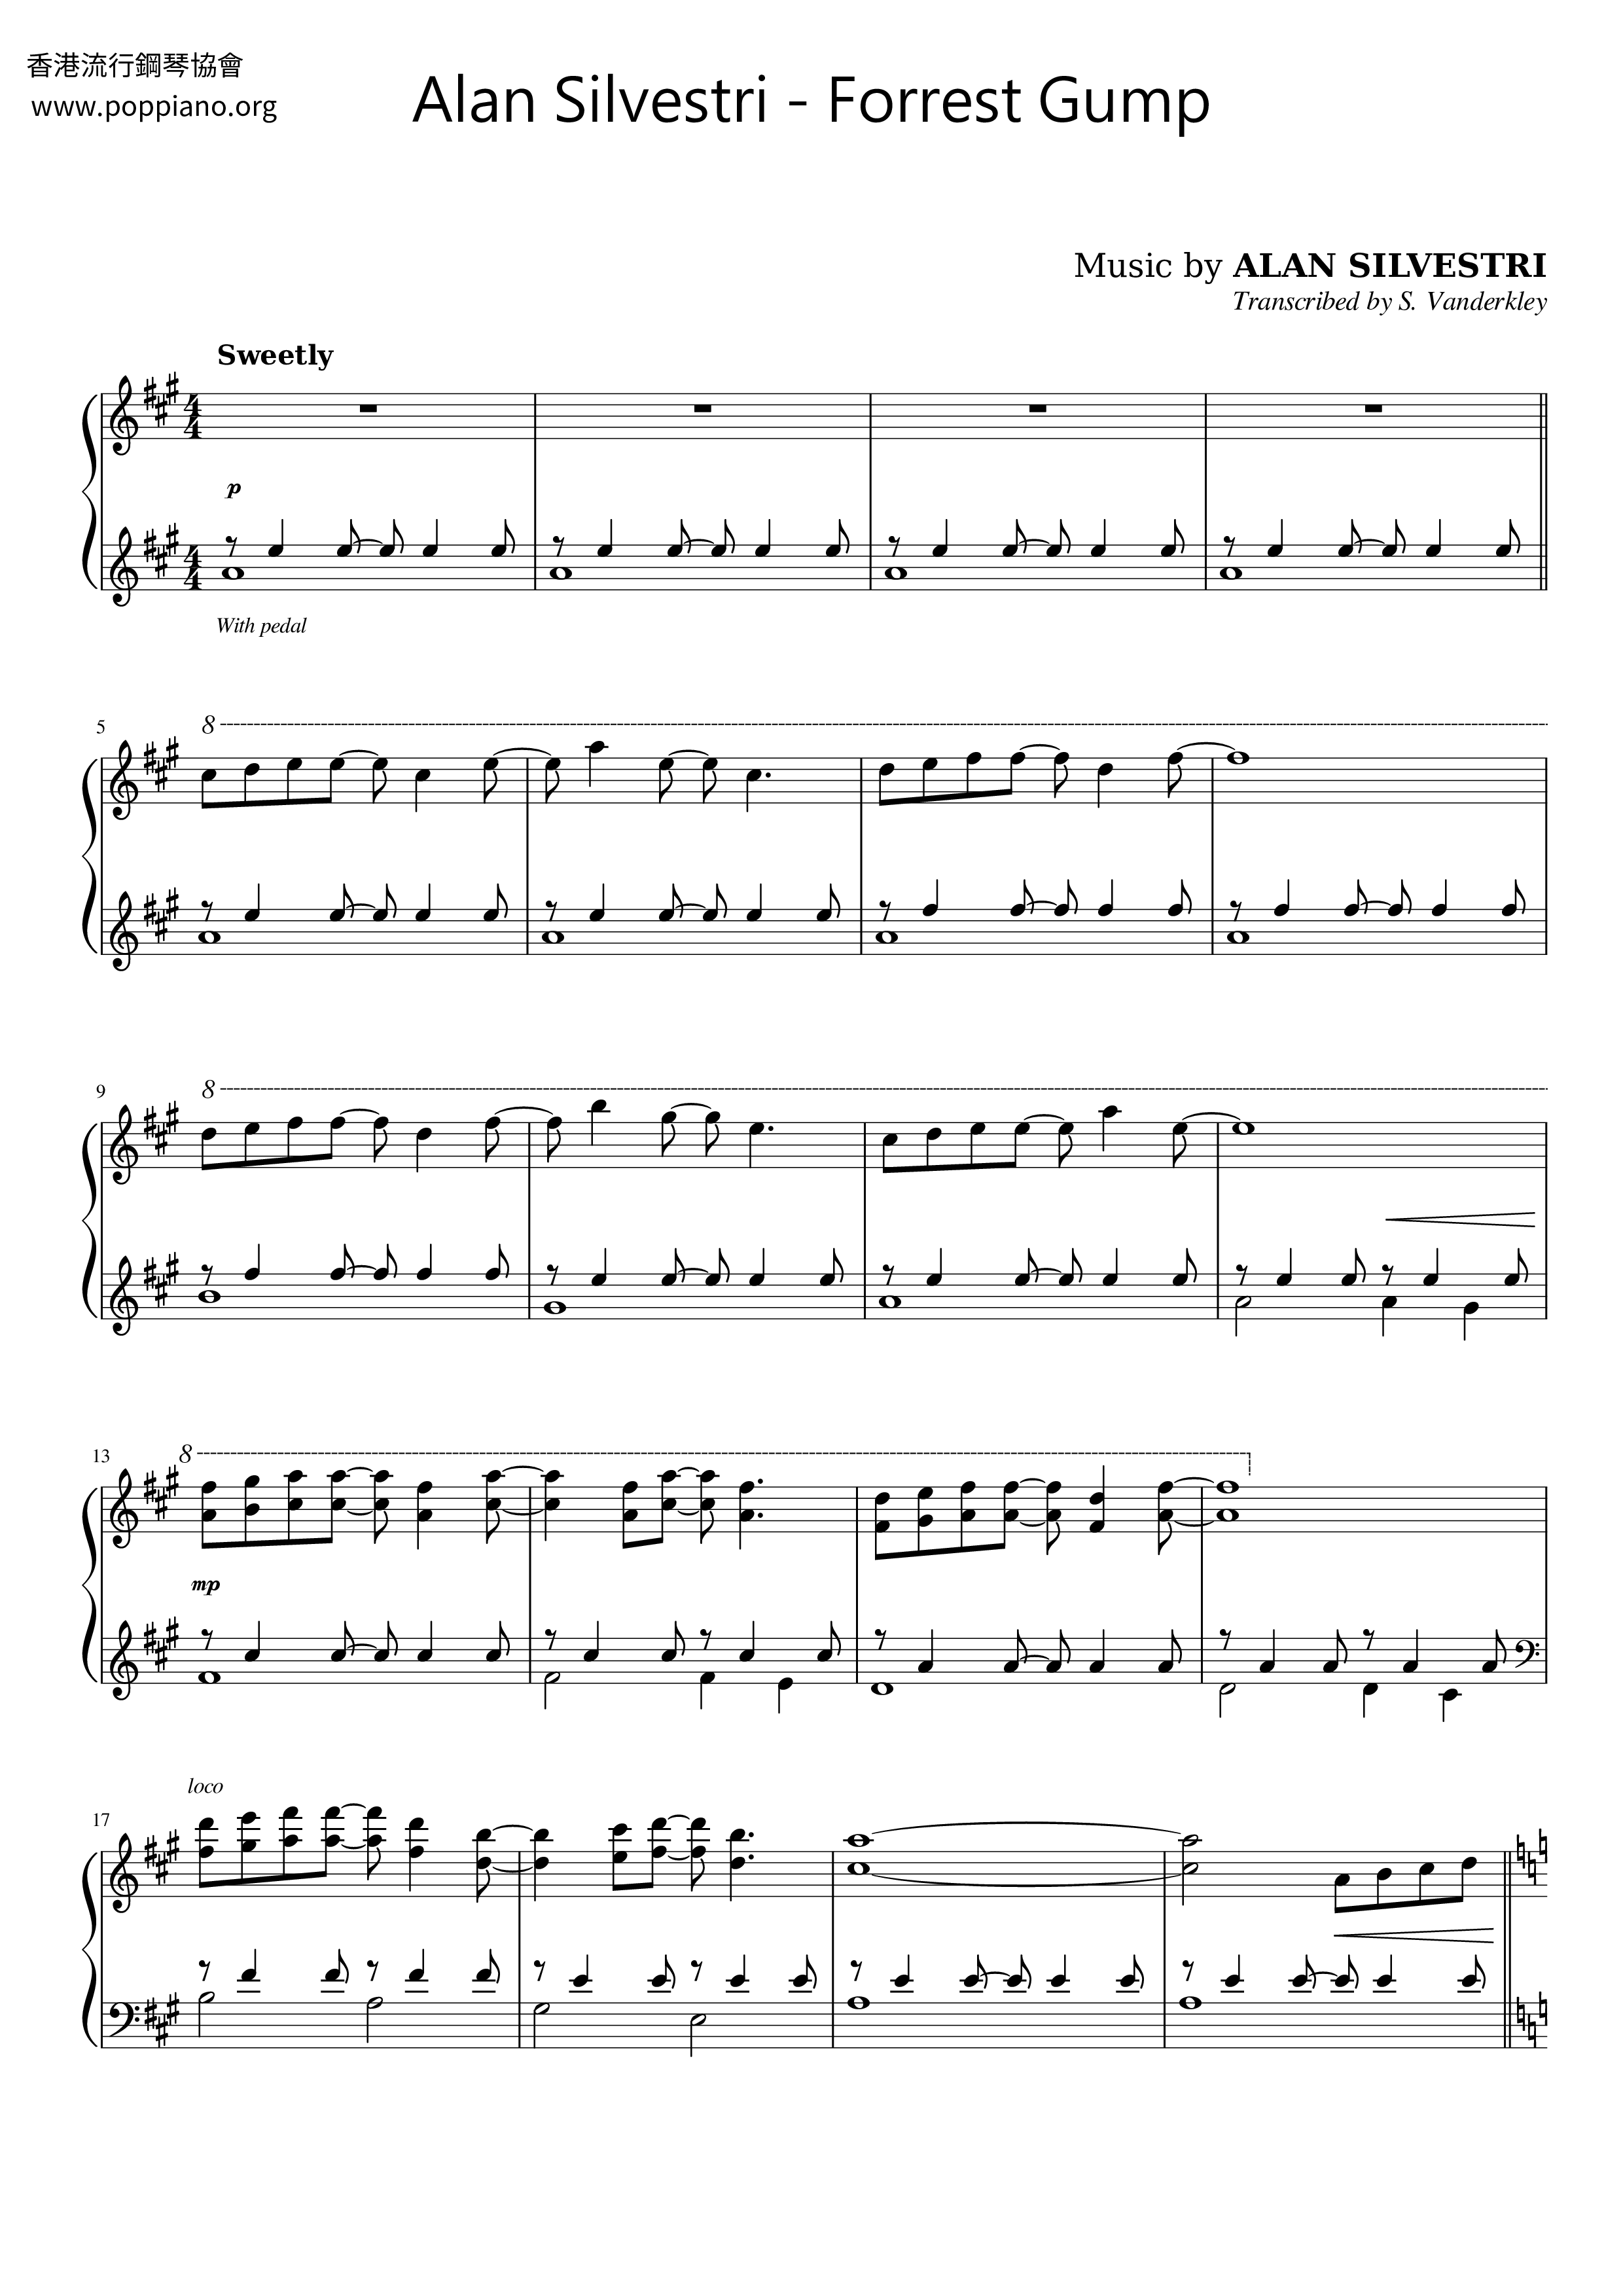 Forrest Gump Theme Song Score